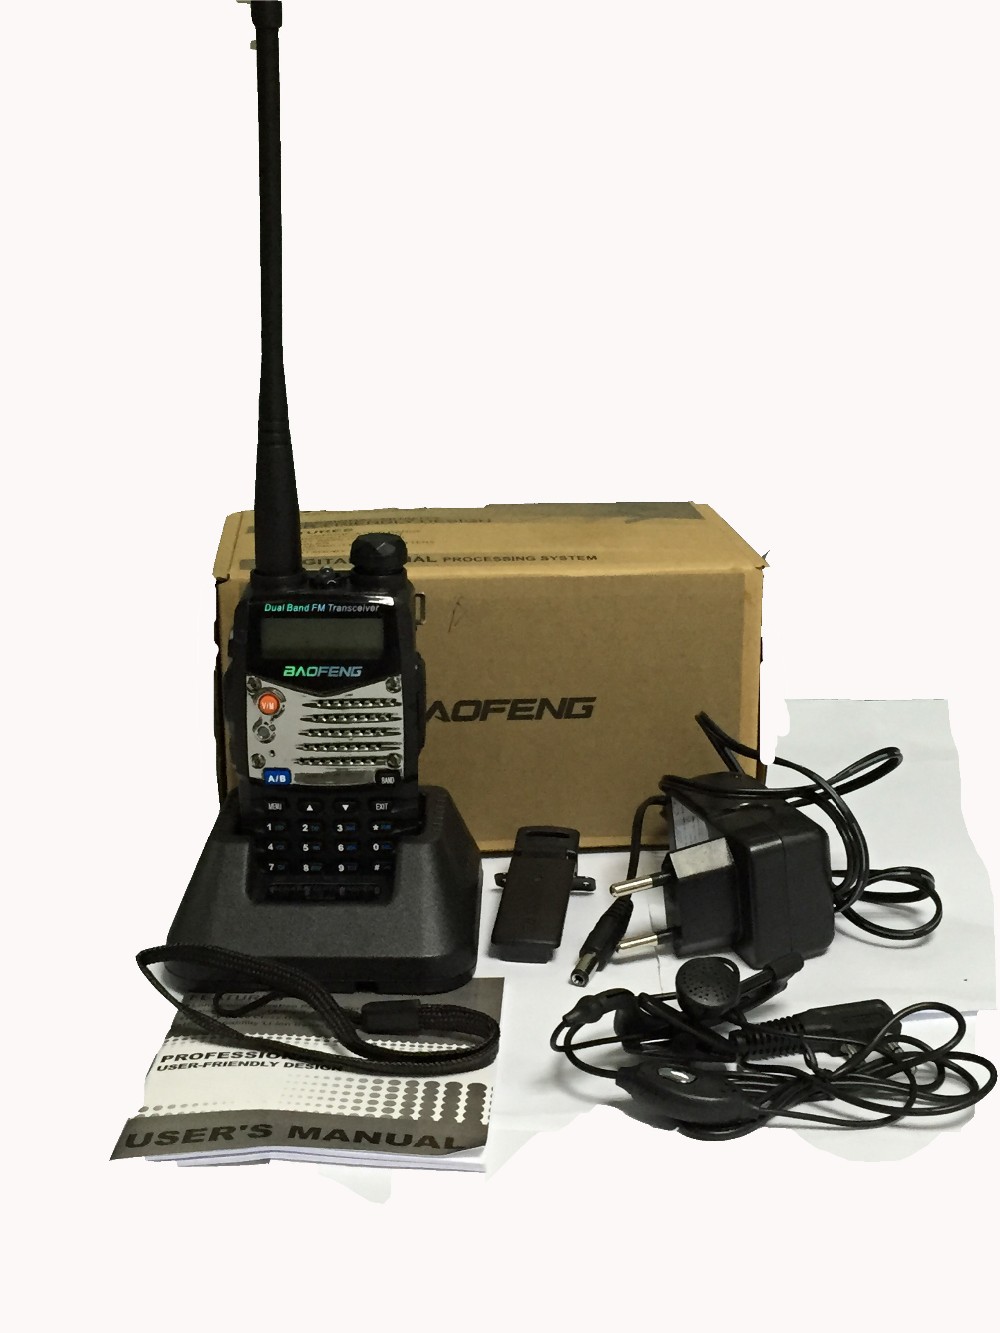 New Waterproof Pofung Baofeng UV-5RA For Police Walkie Talkies Scanner Radio Vhf Uhf Dual Band Cb Ham Radio Transceiver 136-174 (16)